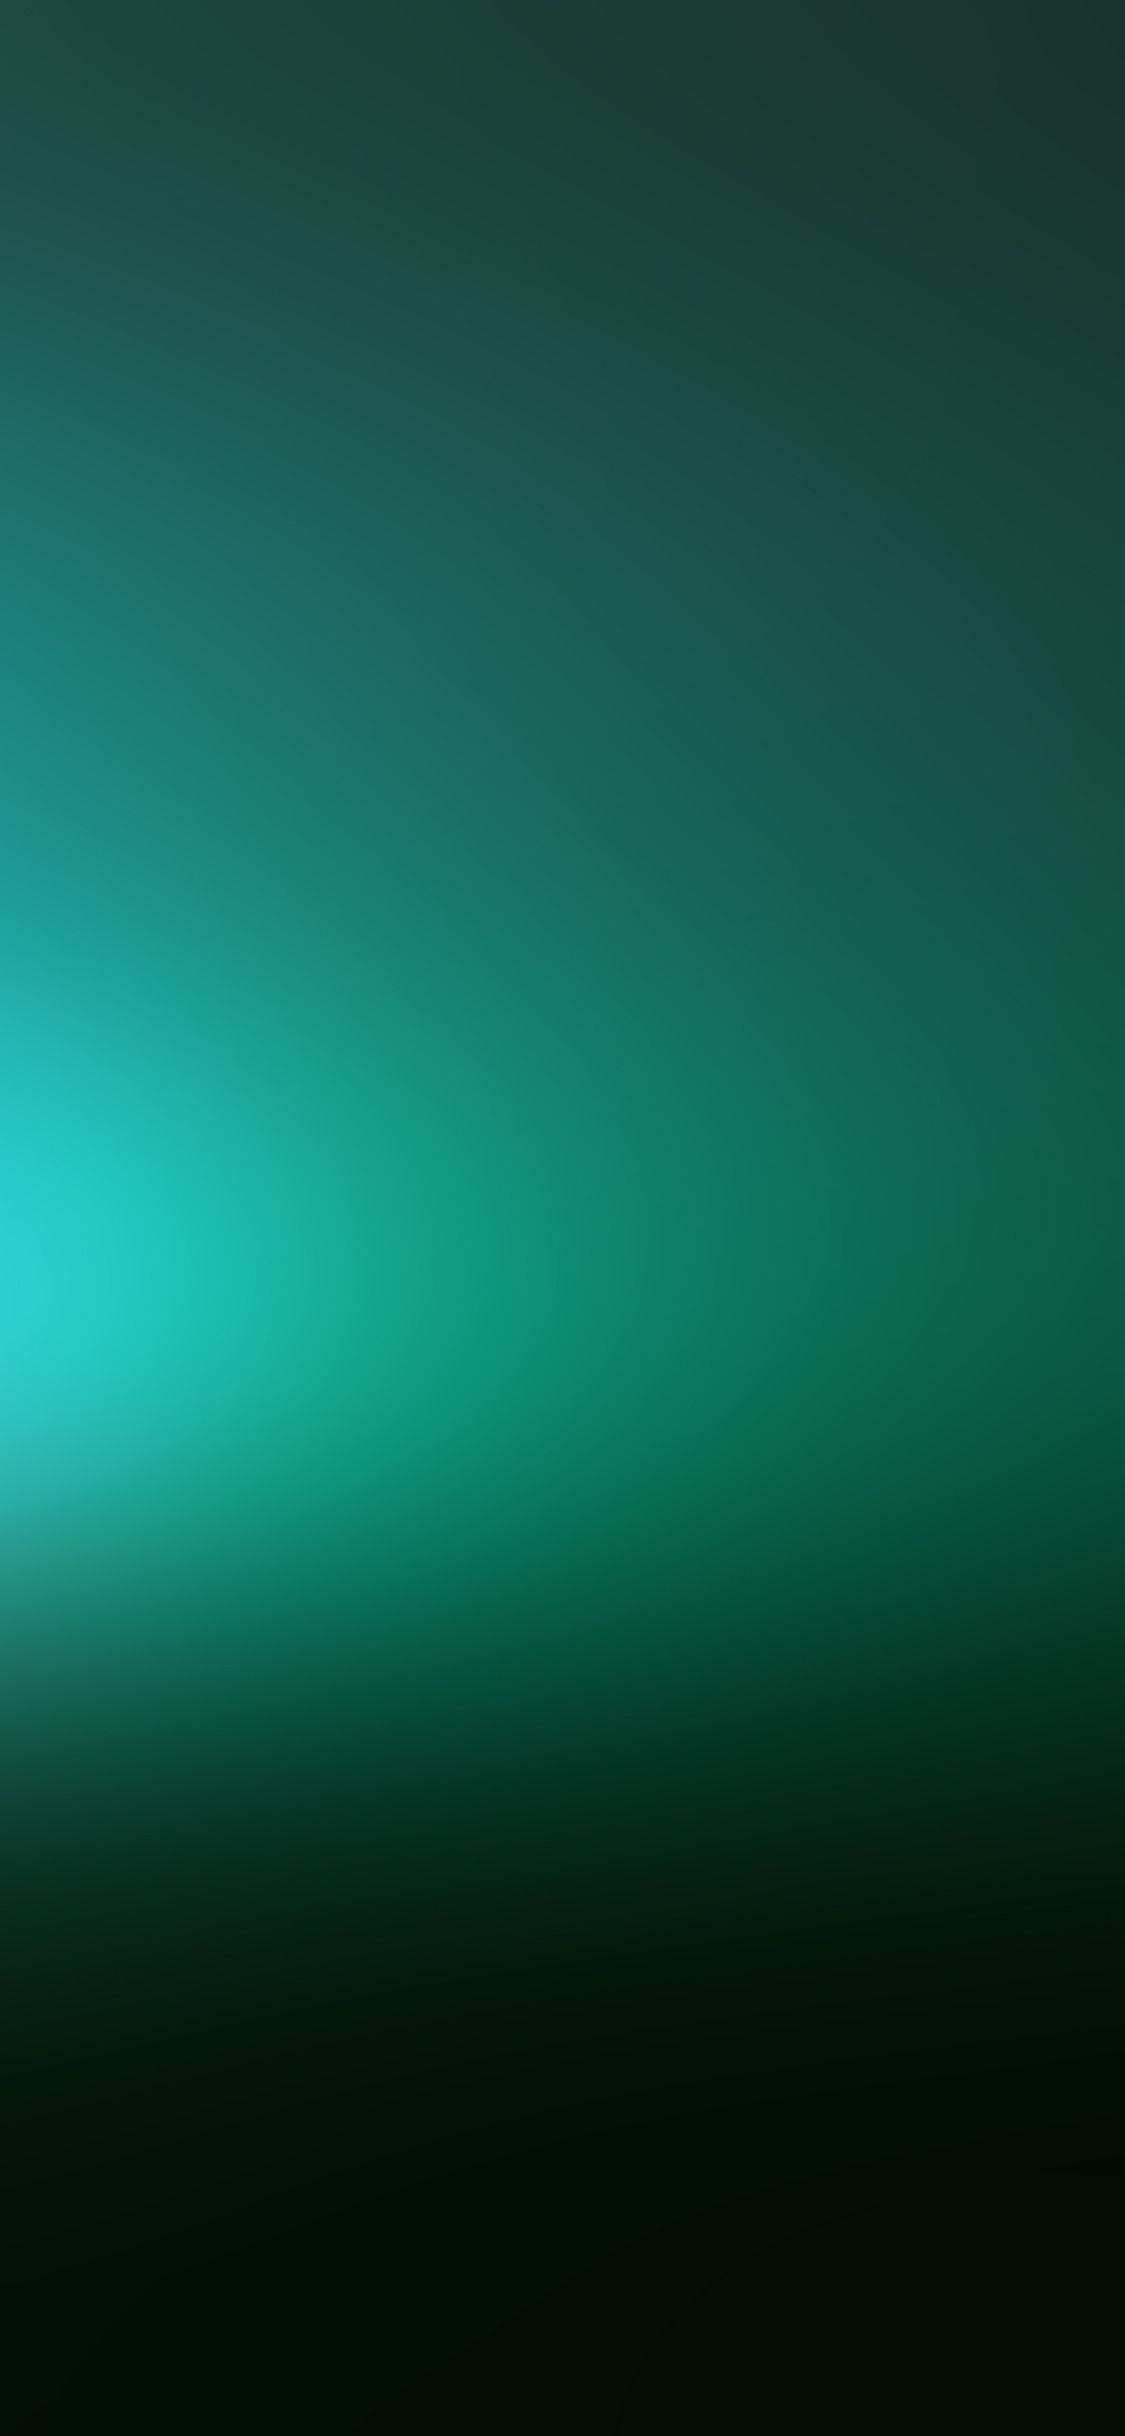 iPhone X wallpaper. blue green friday night live gradation blur